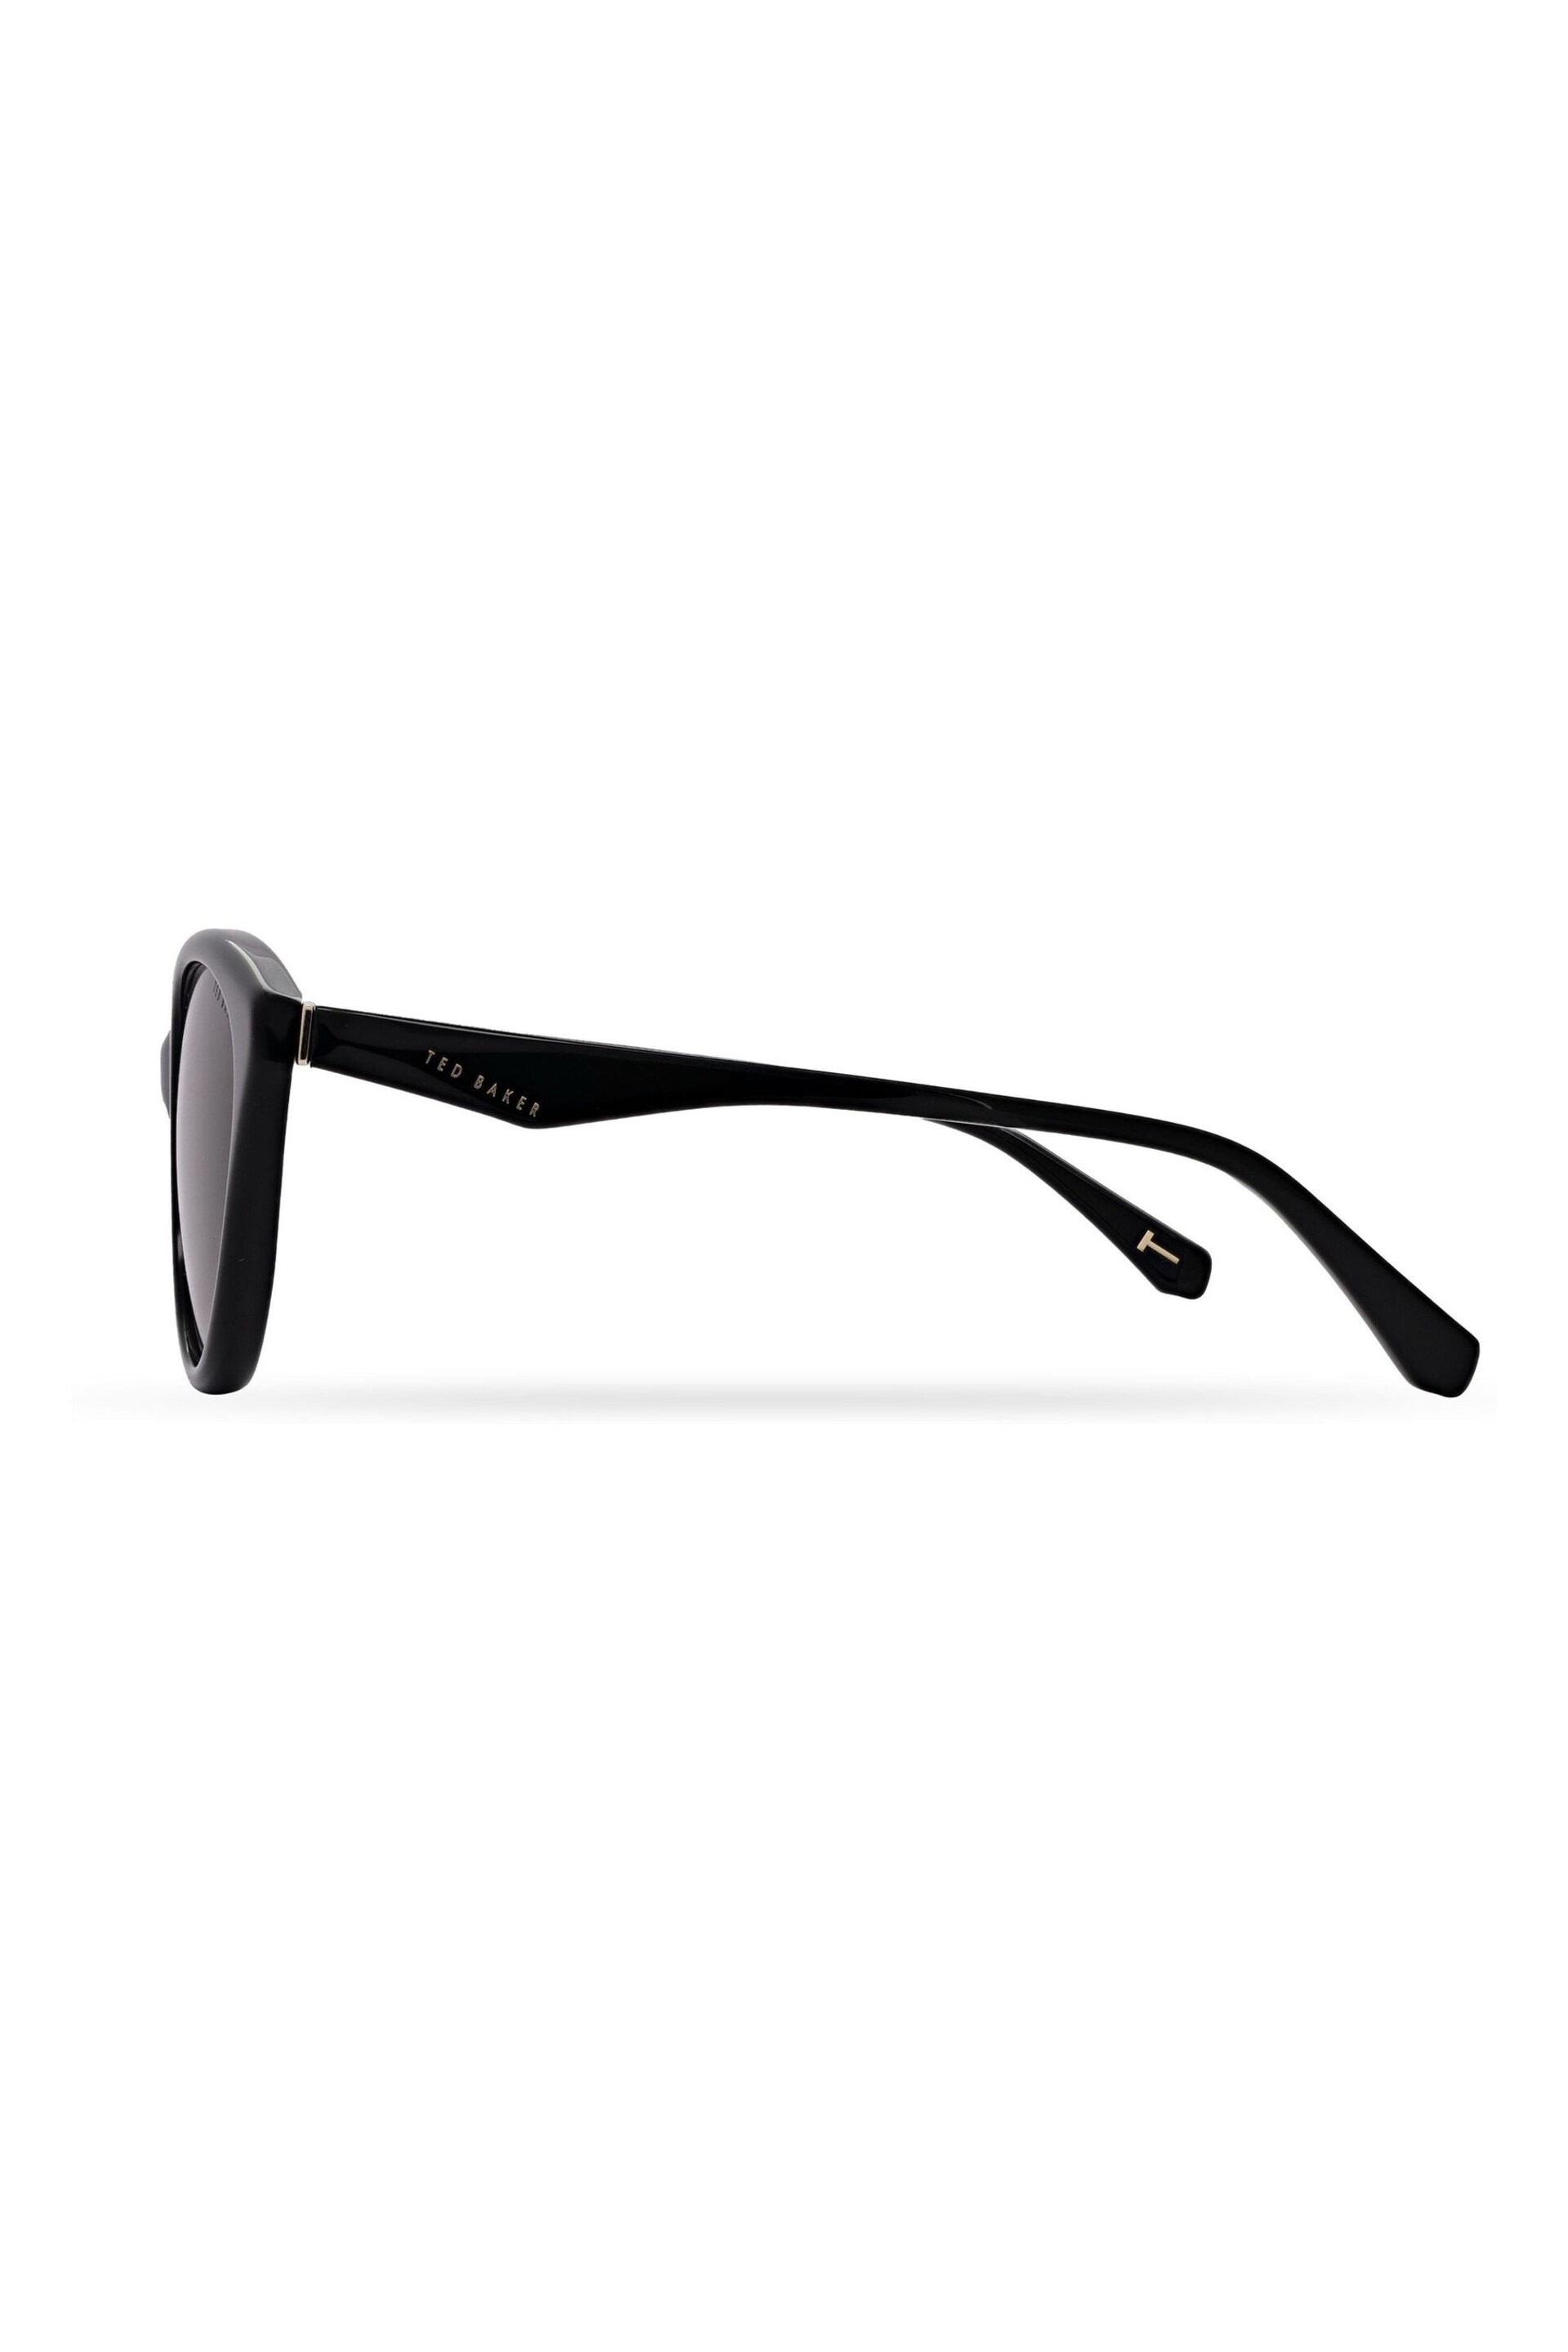 Ted Baker Black Deeha Sunglasses - Image 3 of 5